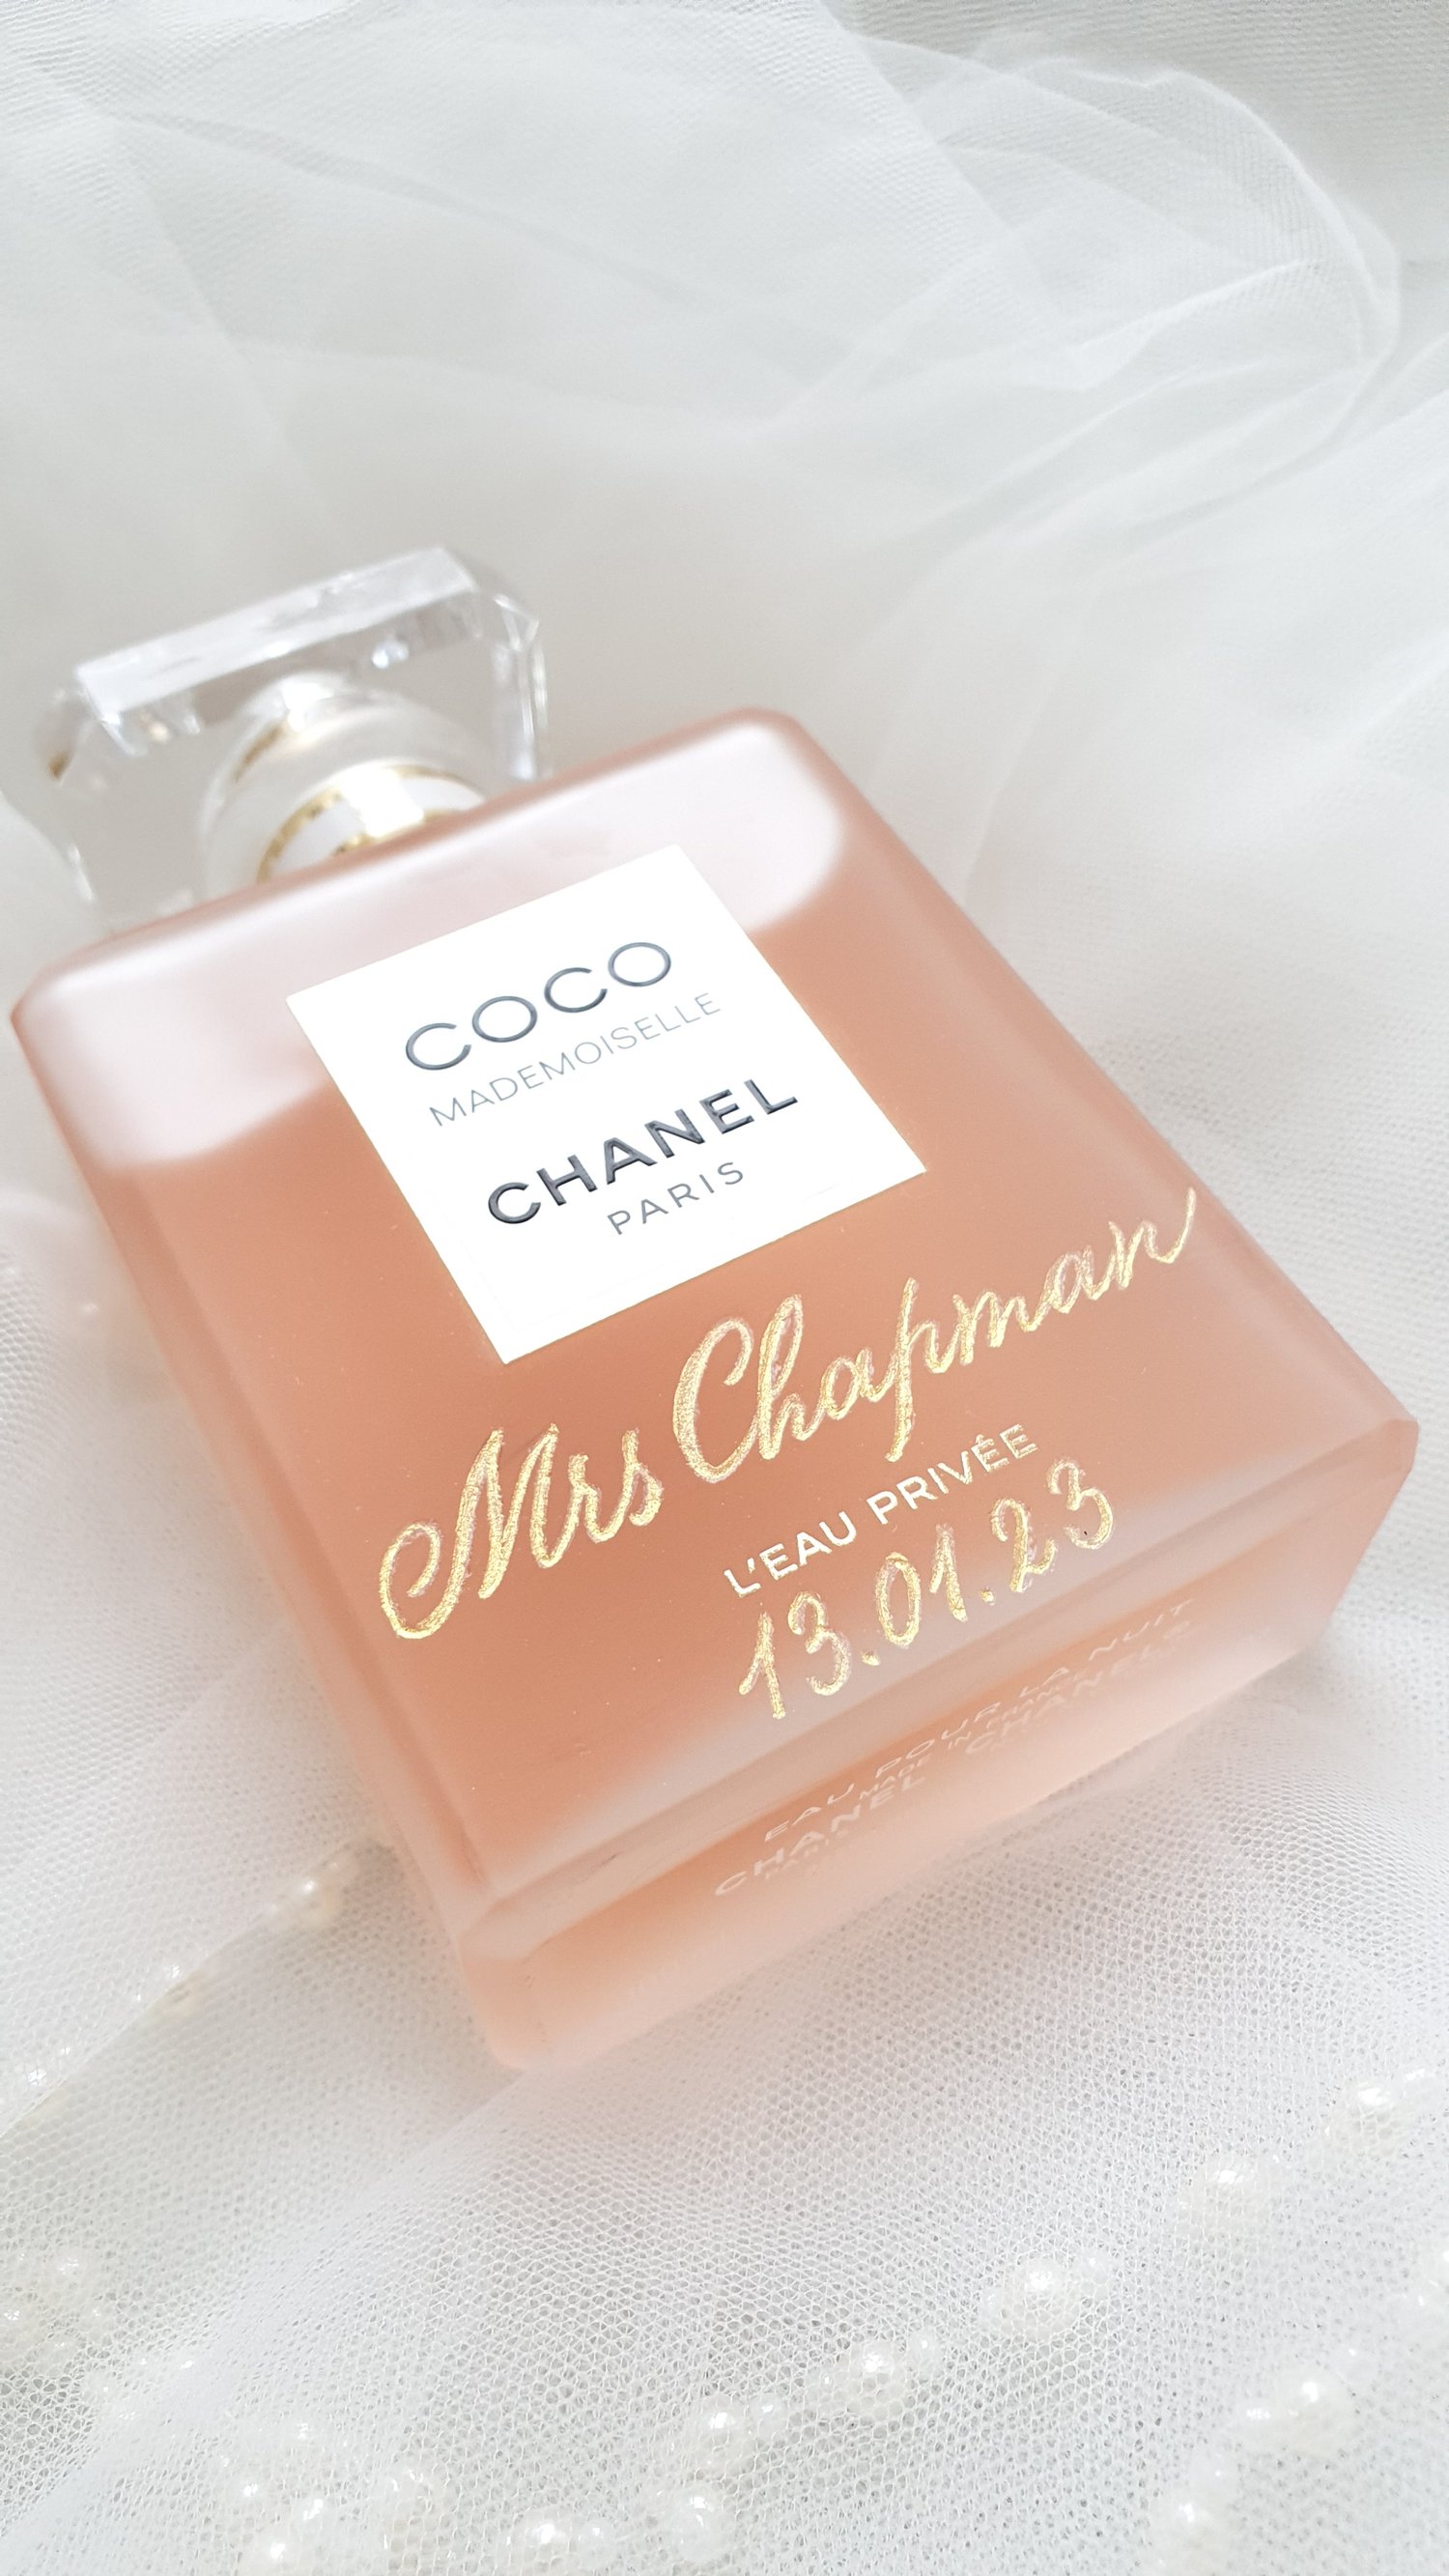 coco mademoiselle chanel perfume night fragrance